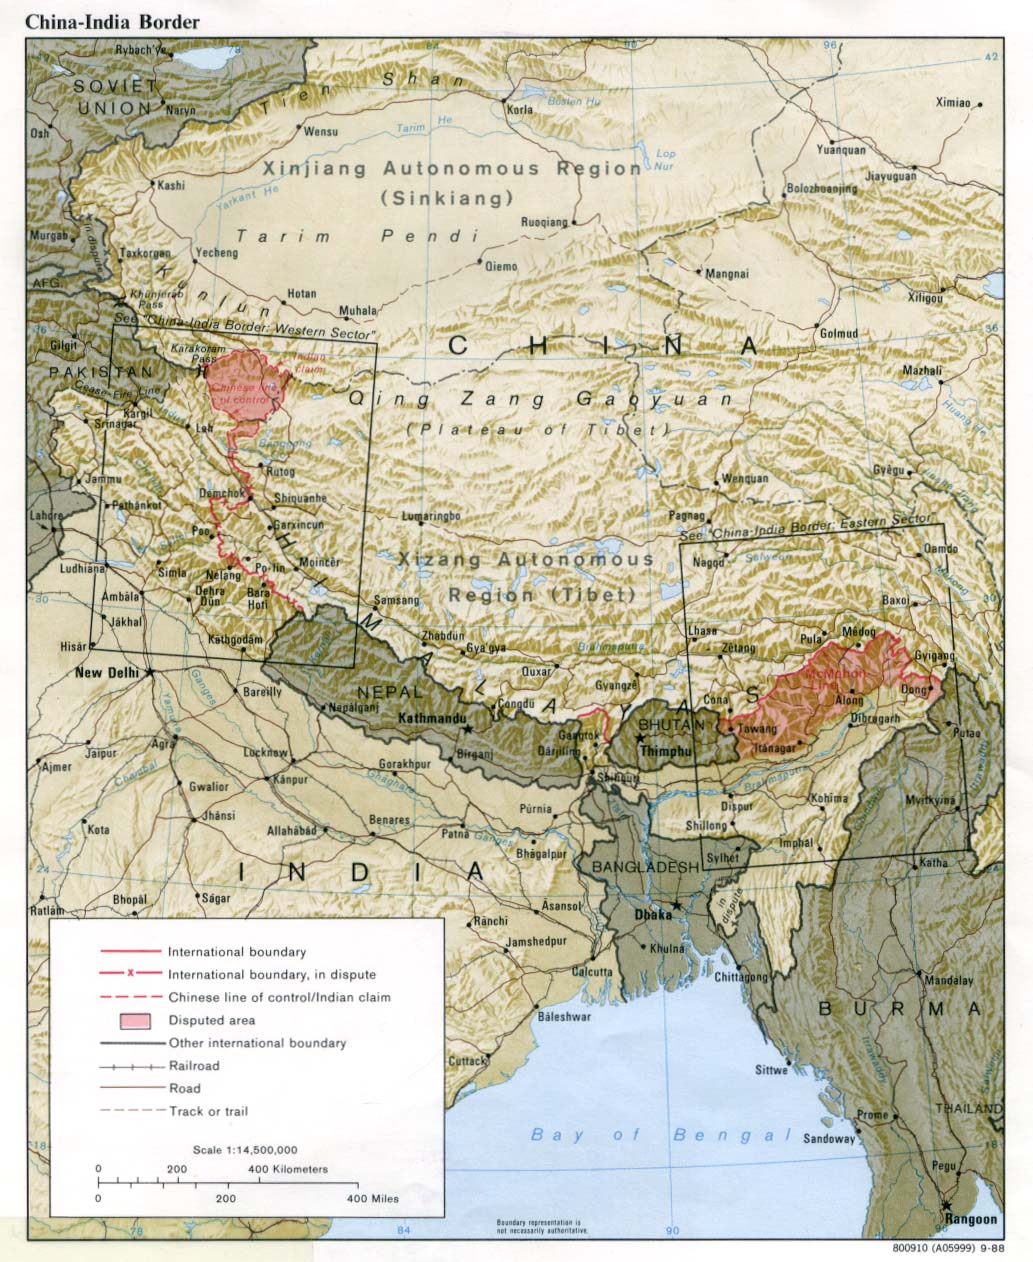 India_China_Kashmir_&_NEFA_(North_East_Frontier_Agency)_Border_Himalayas